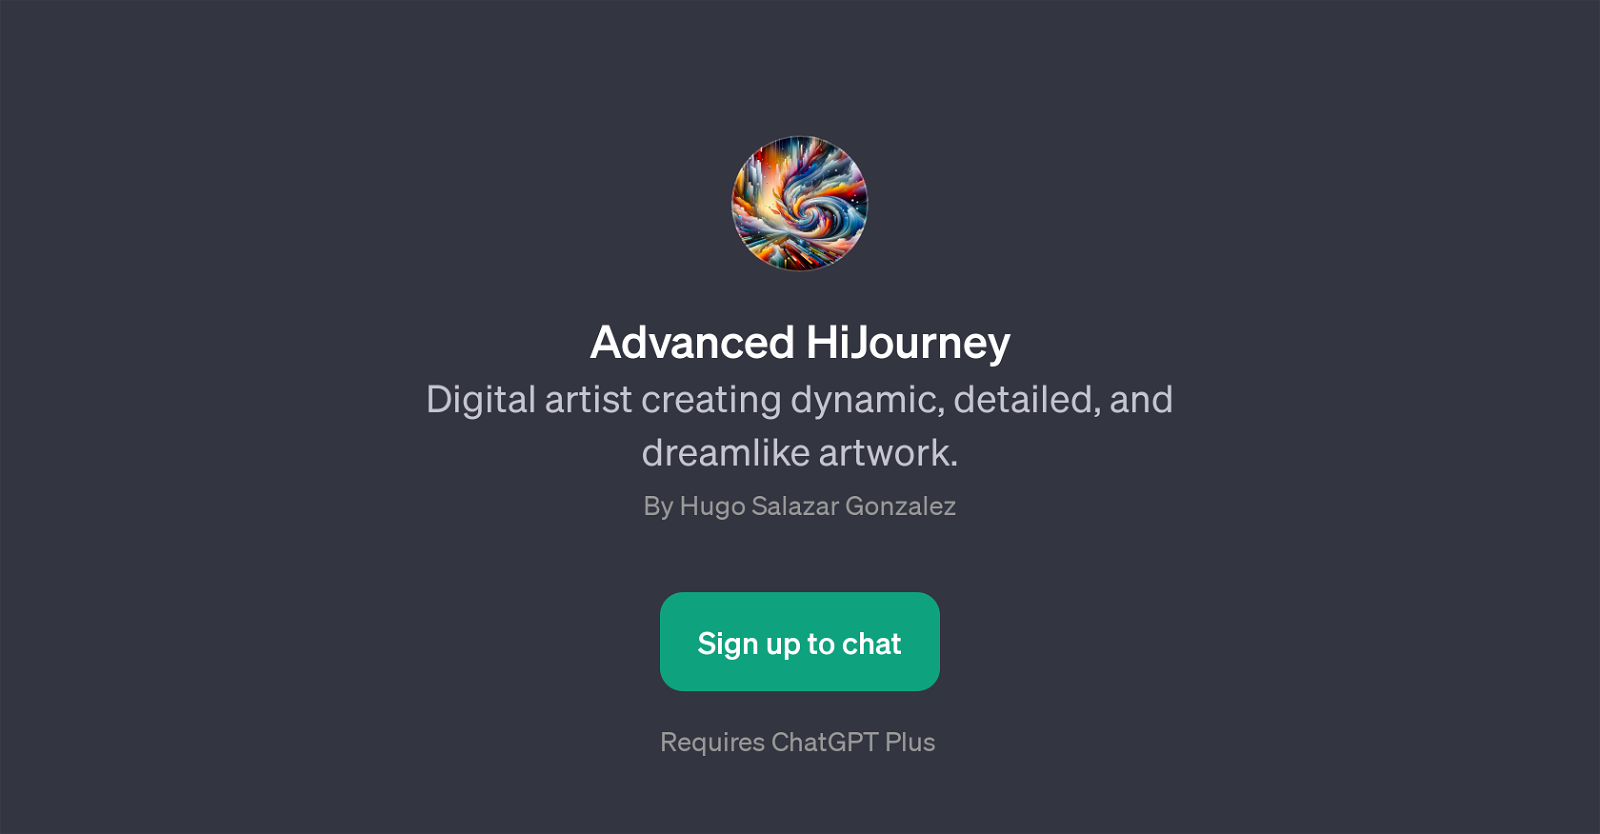 Advanced HiJourney website